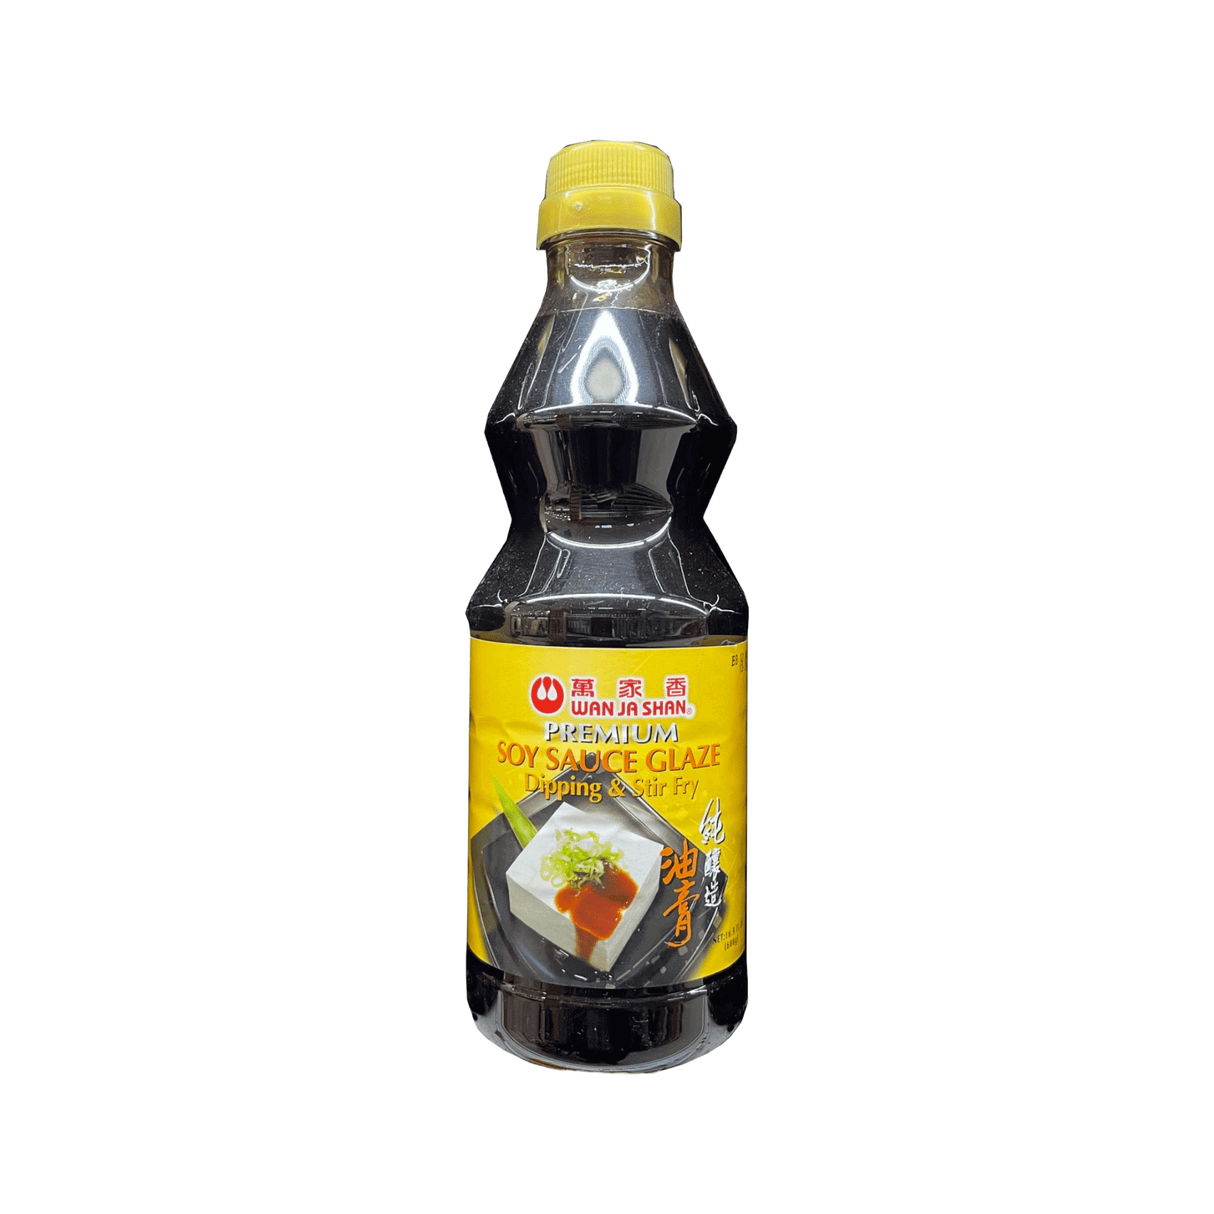 Wan Ja Shan Premium Soy Sauce Glaze Dipping & Stir Fry